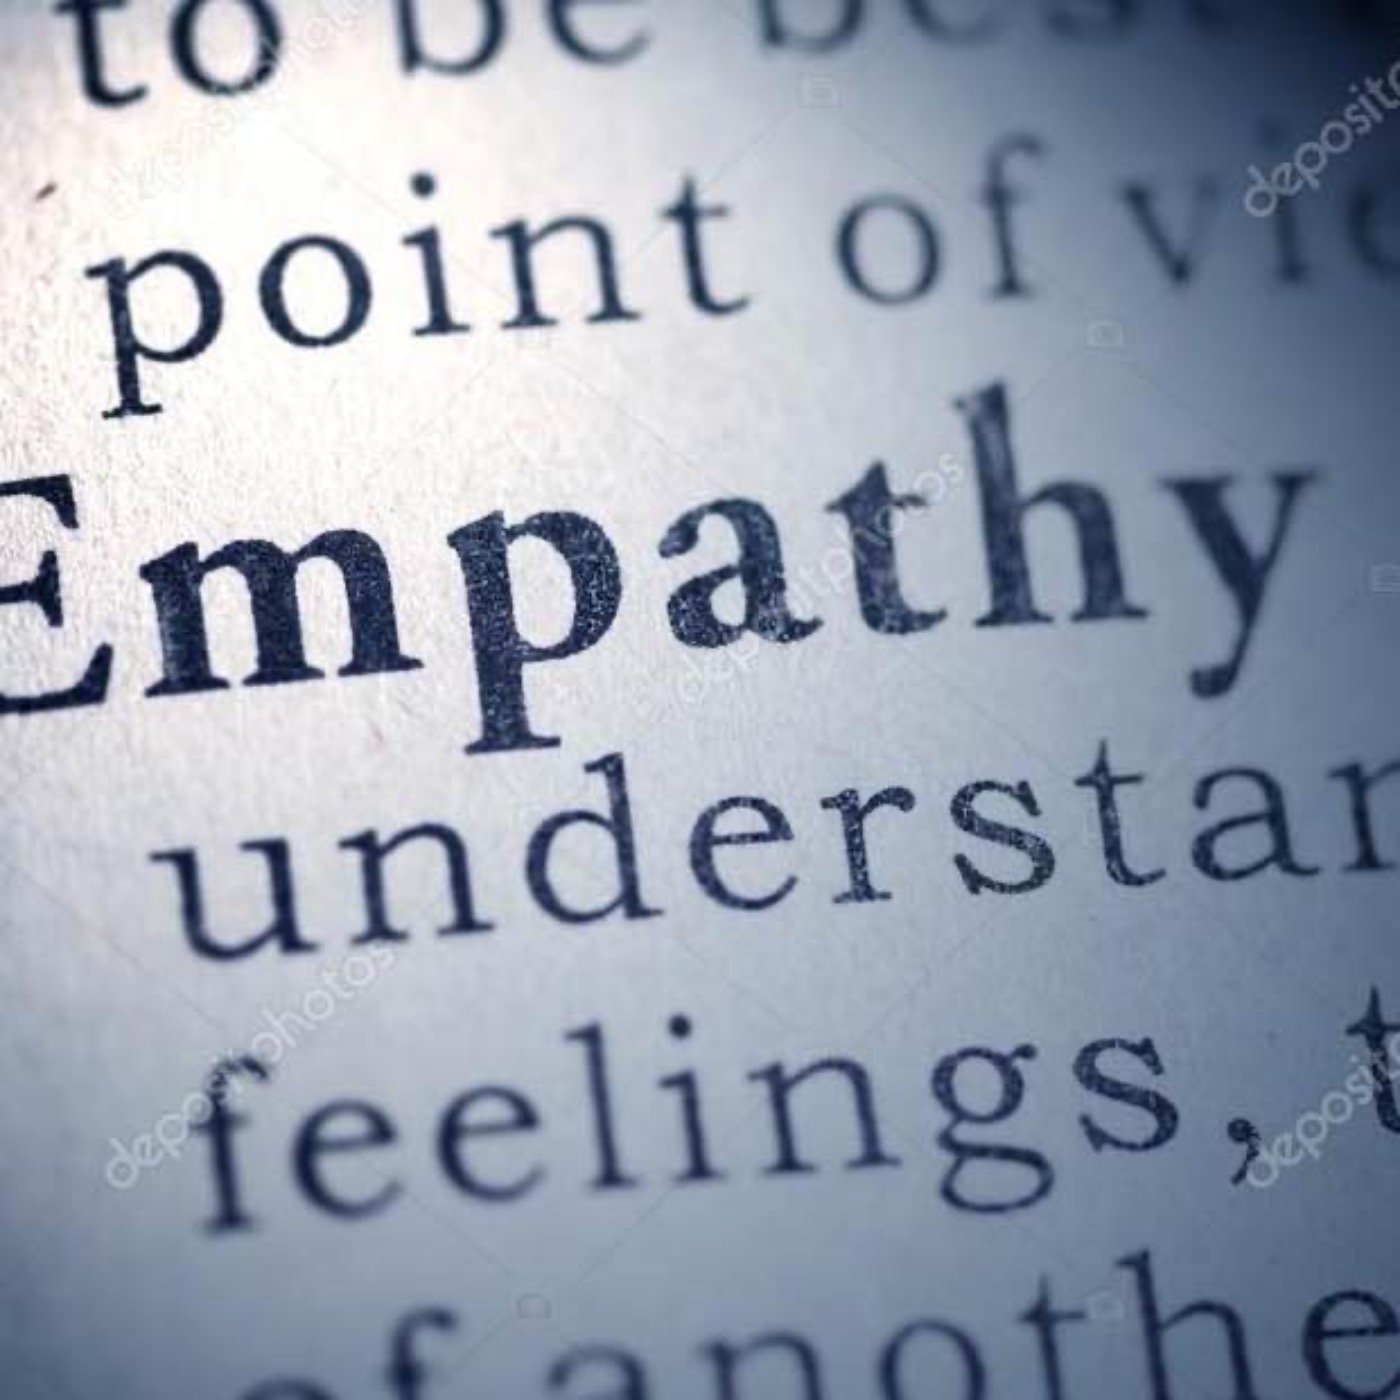 La importancia de la empatía